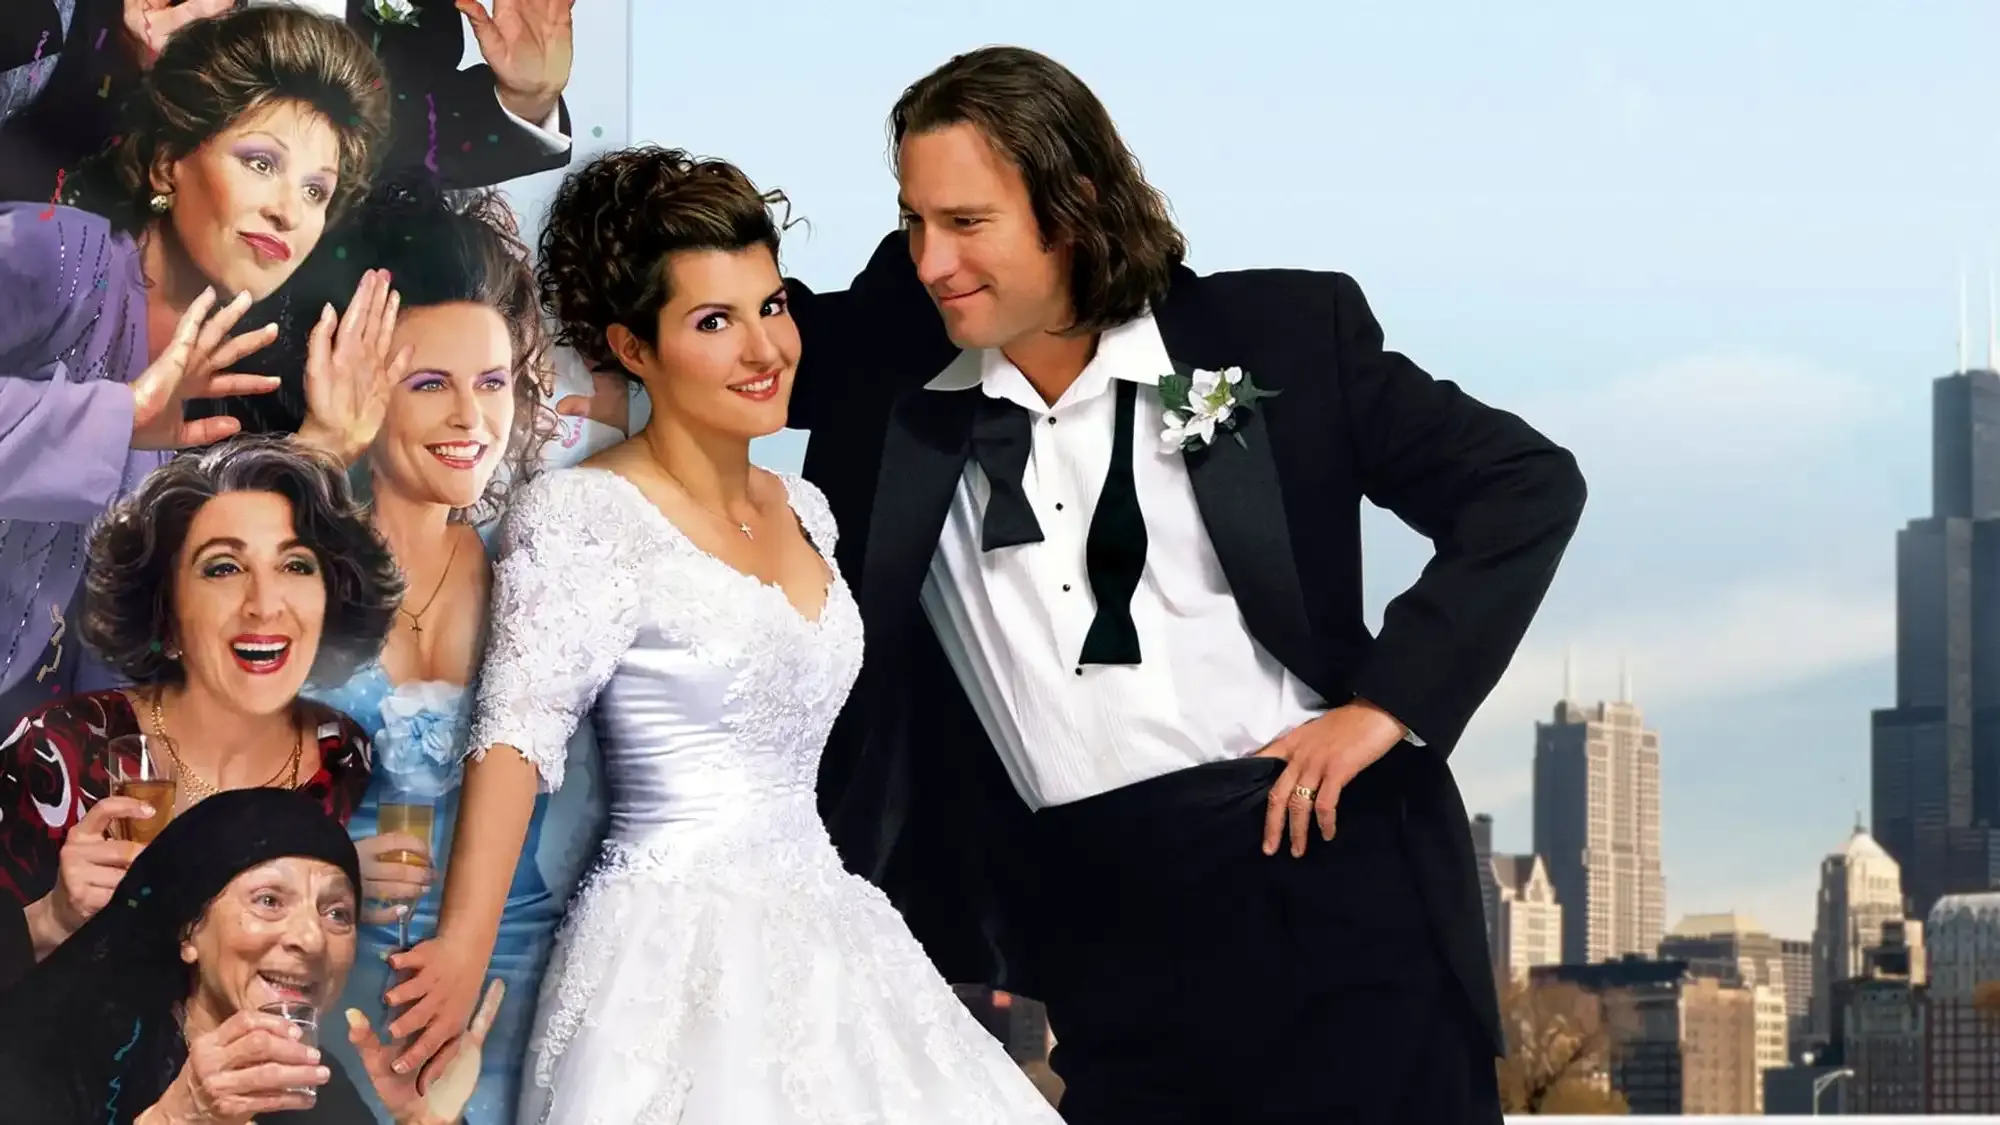 My Big Fat Greek Wedding movie review